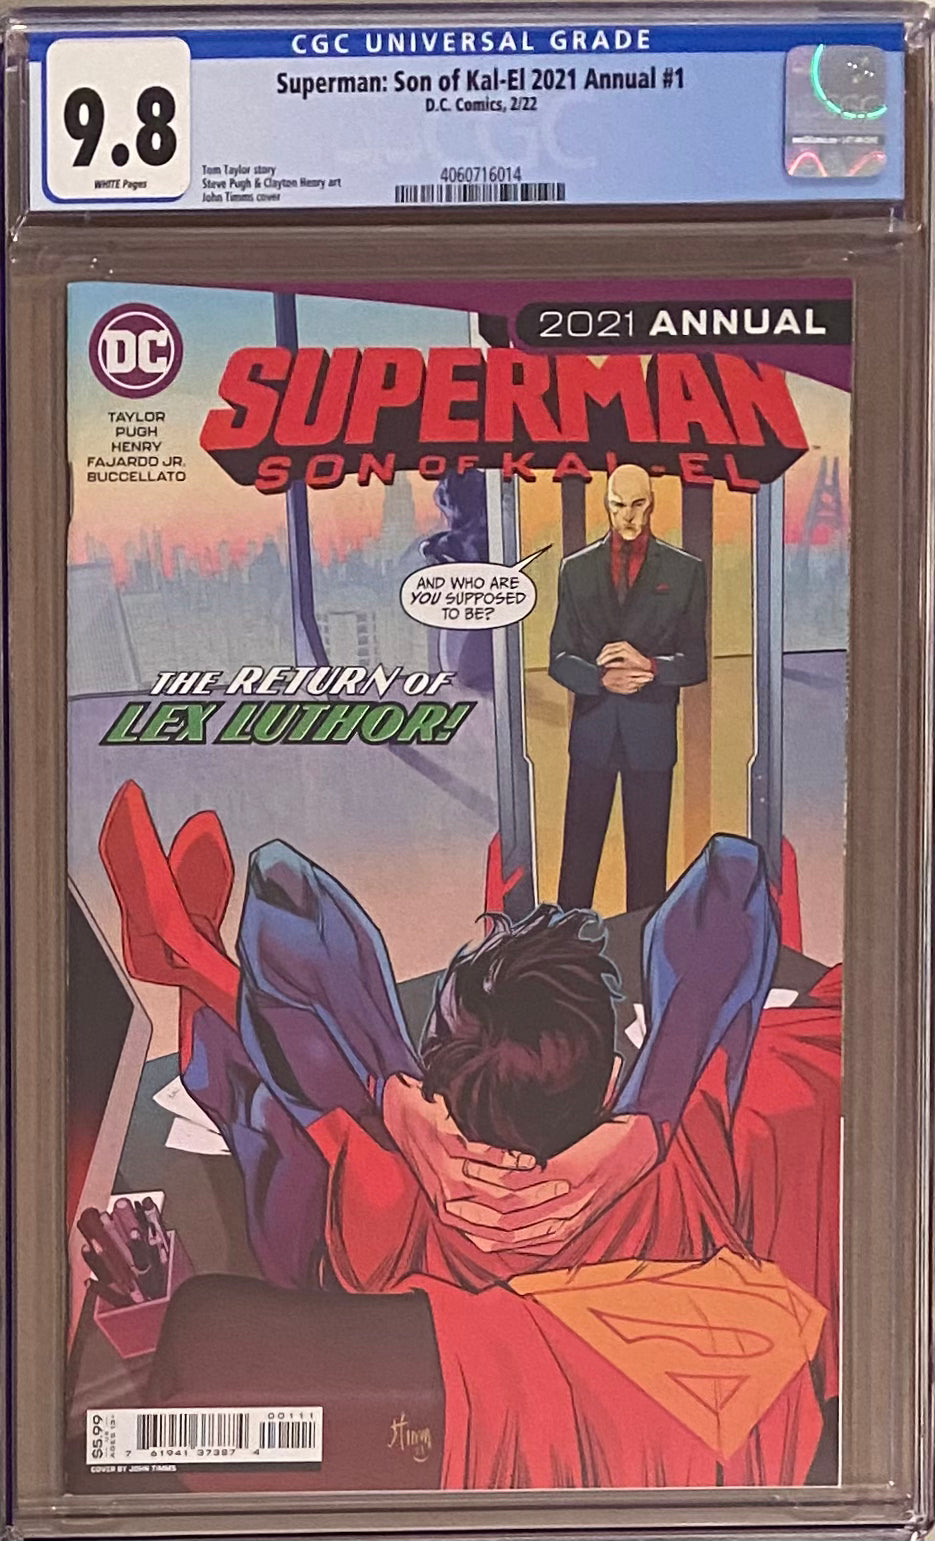 Superman: Son of Kal-El 2021 Annual #1 CGC 9.8